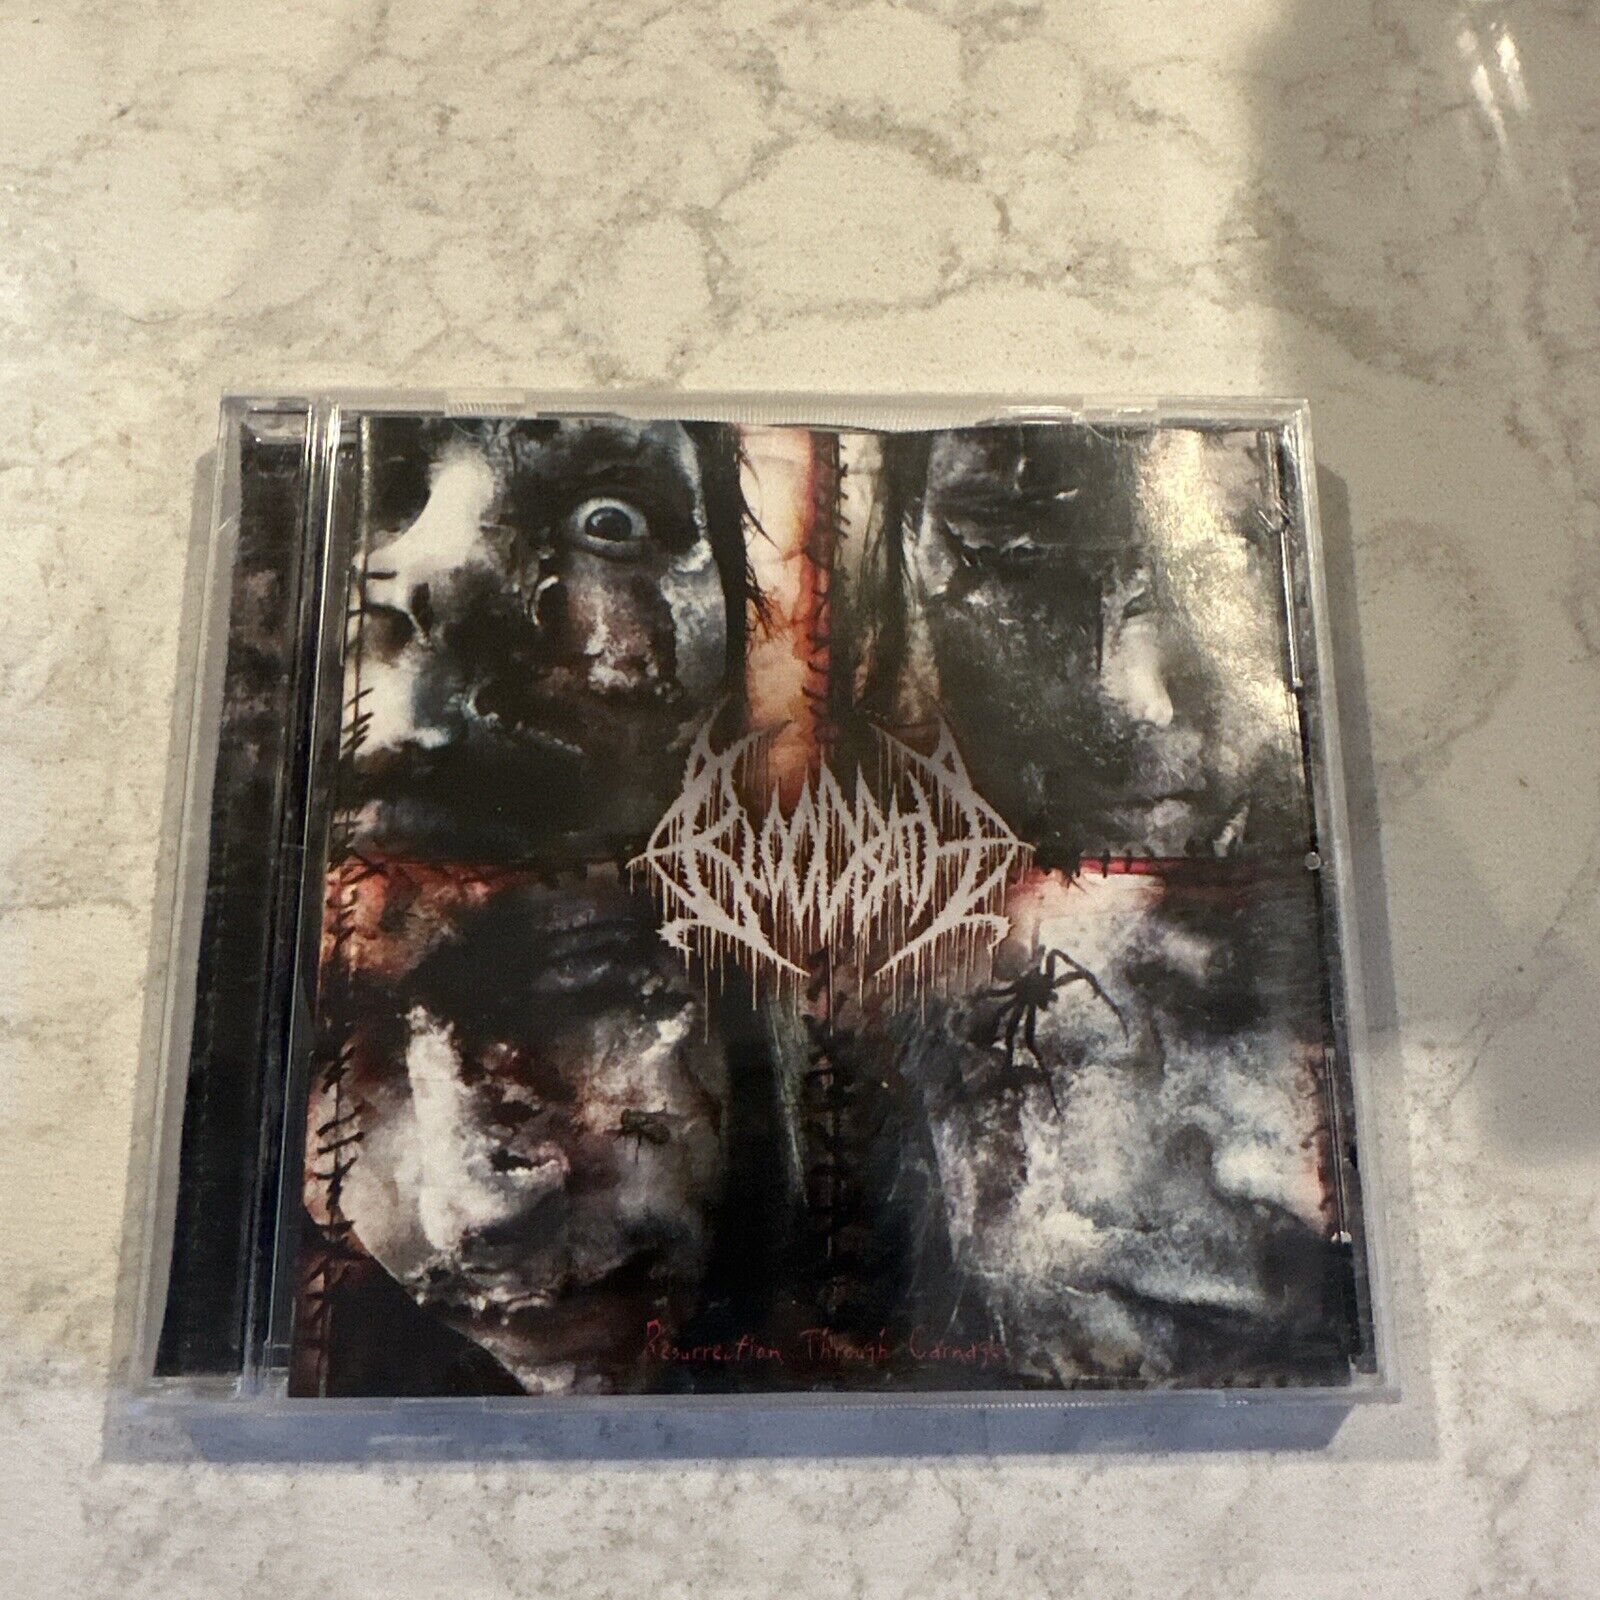 Bloodbath - Resurrection Through Carnage CD (Century Media Records 8155-2) M1